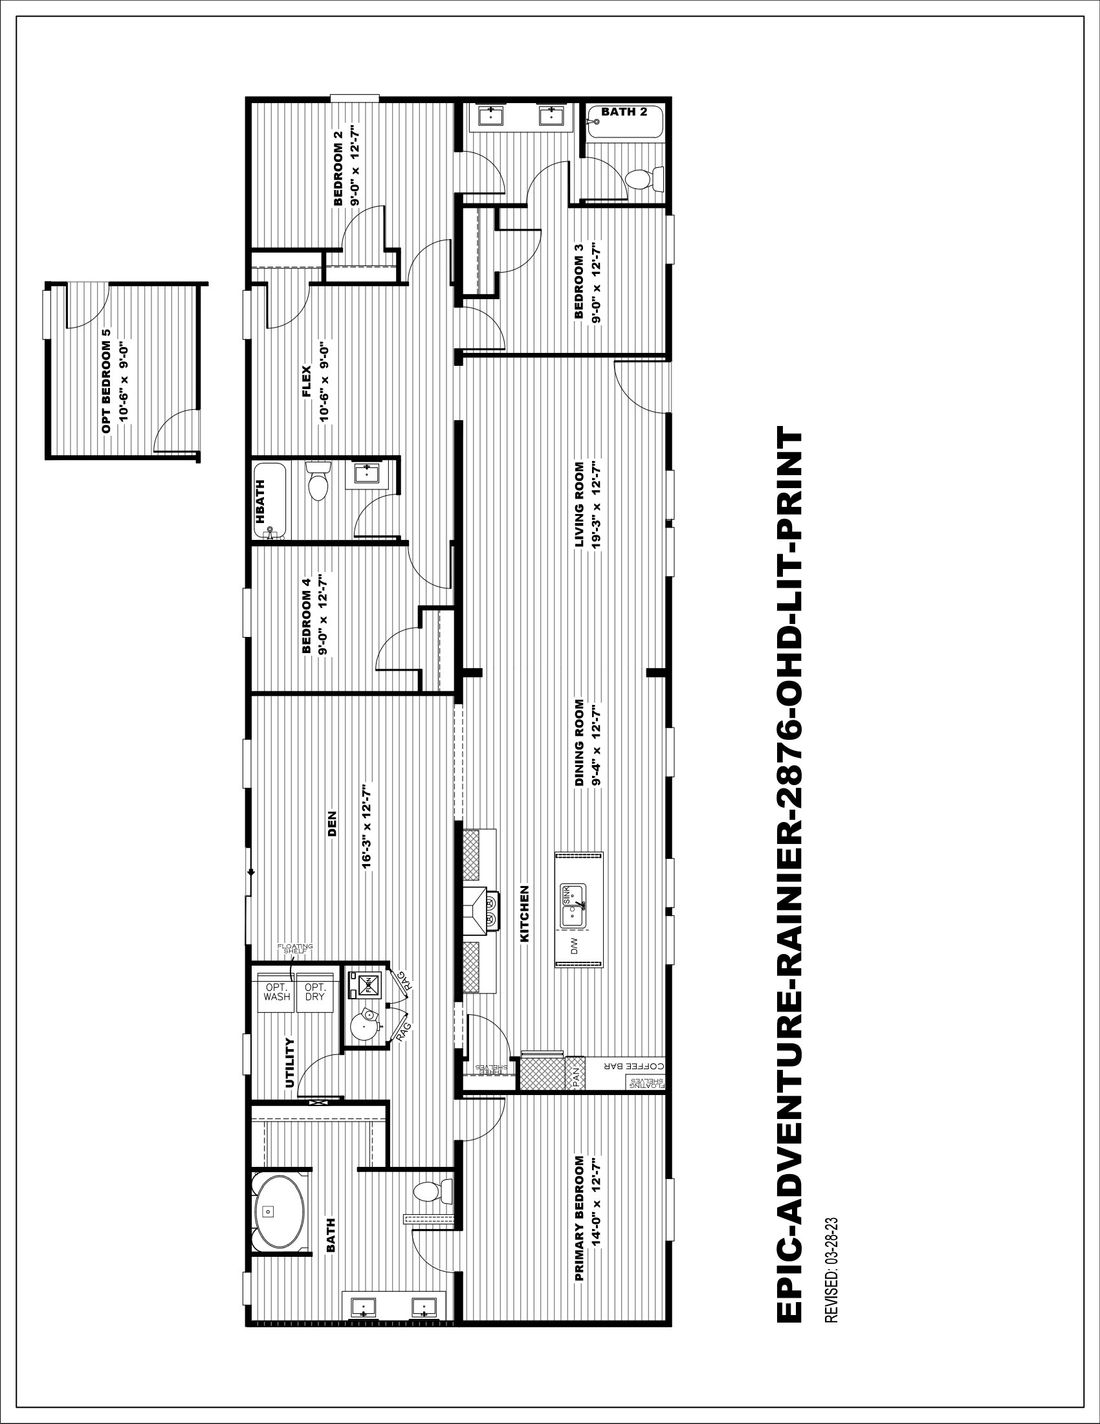 The NEW RAINIER 7628-2303 Floor Plan